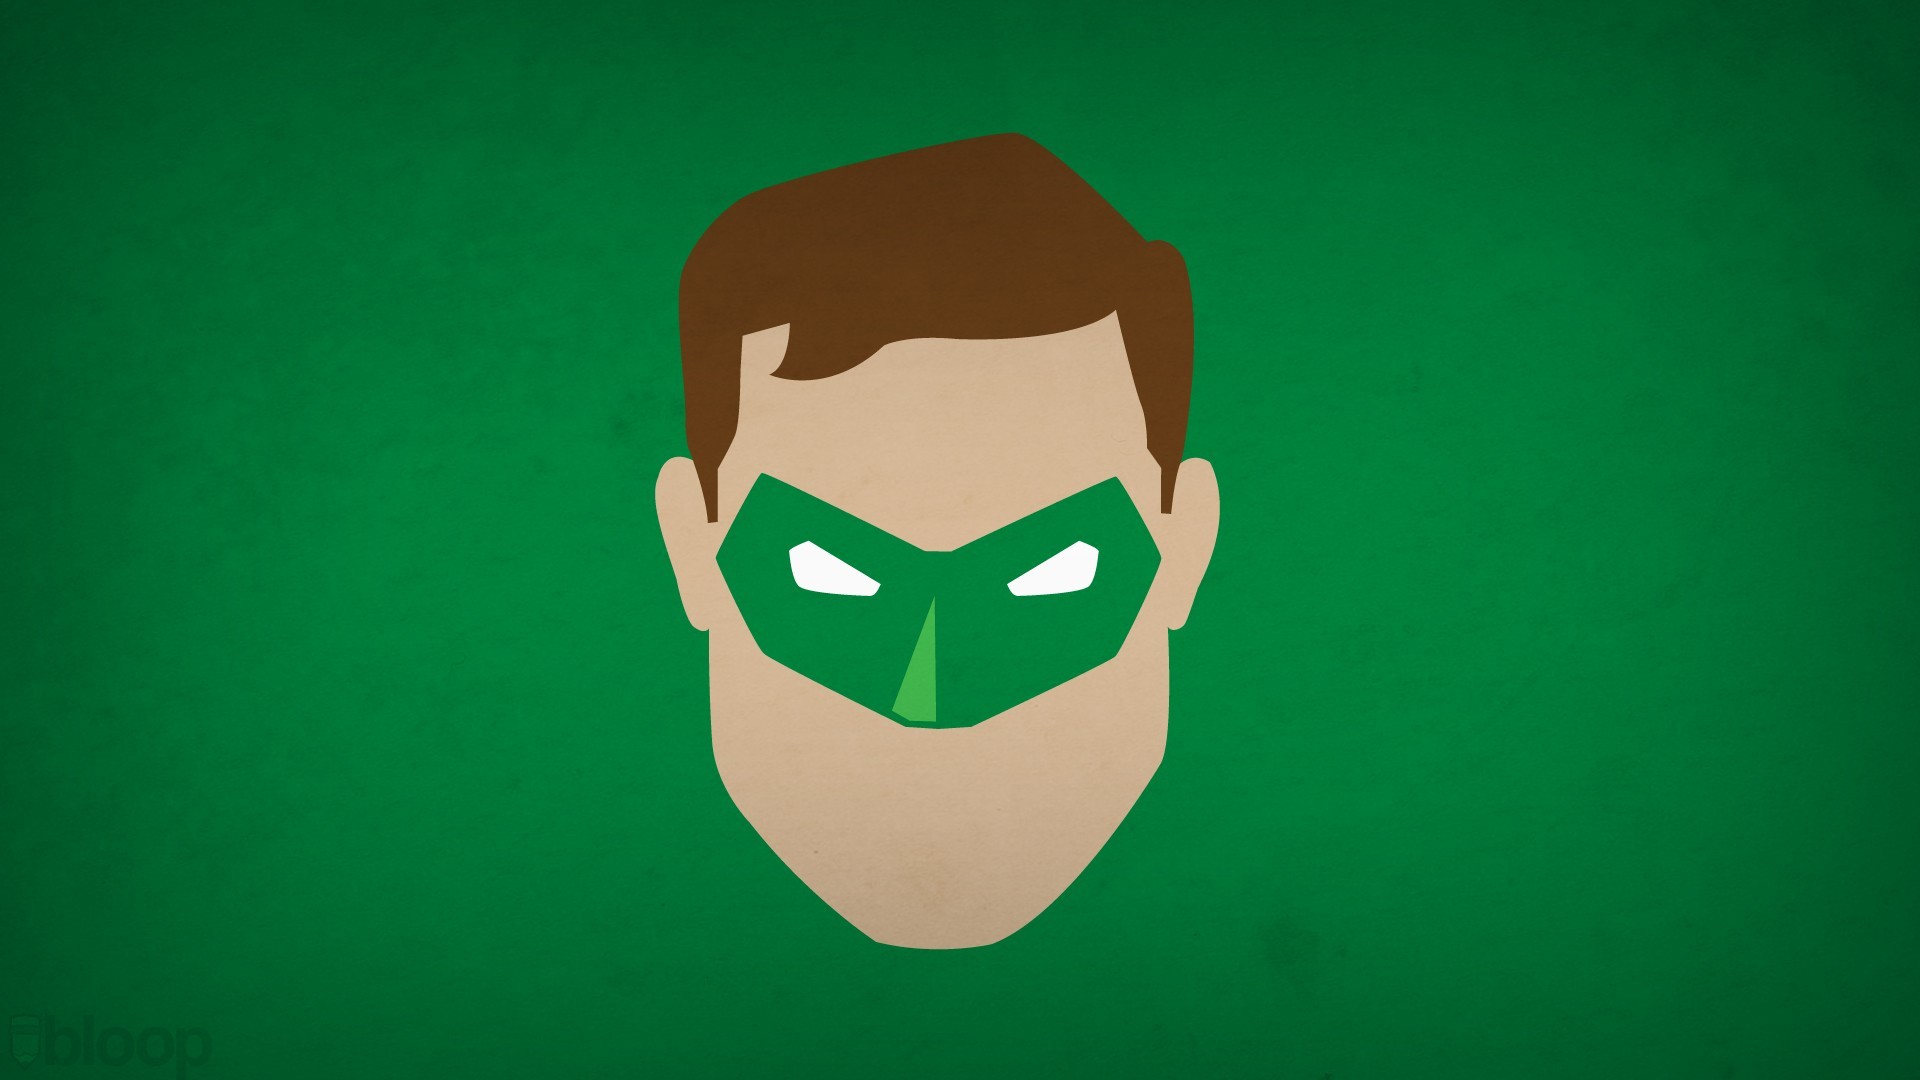 General 1920x1080 Blo0p green mask green background artwork superhero DC Comics